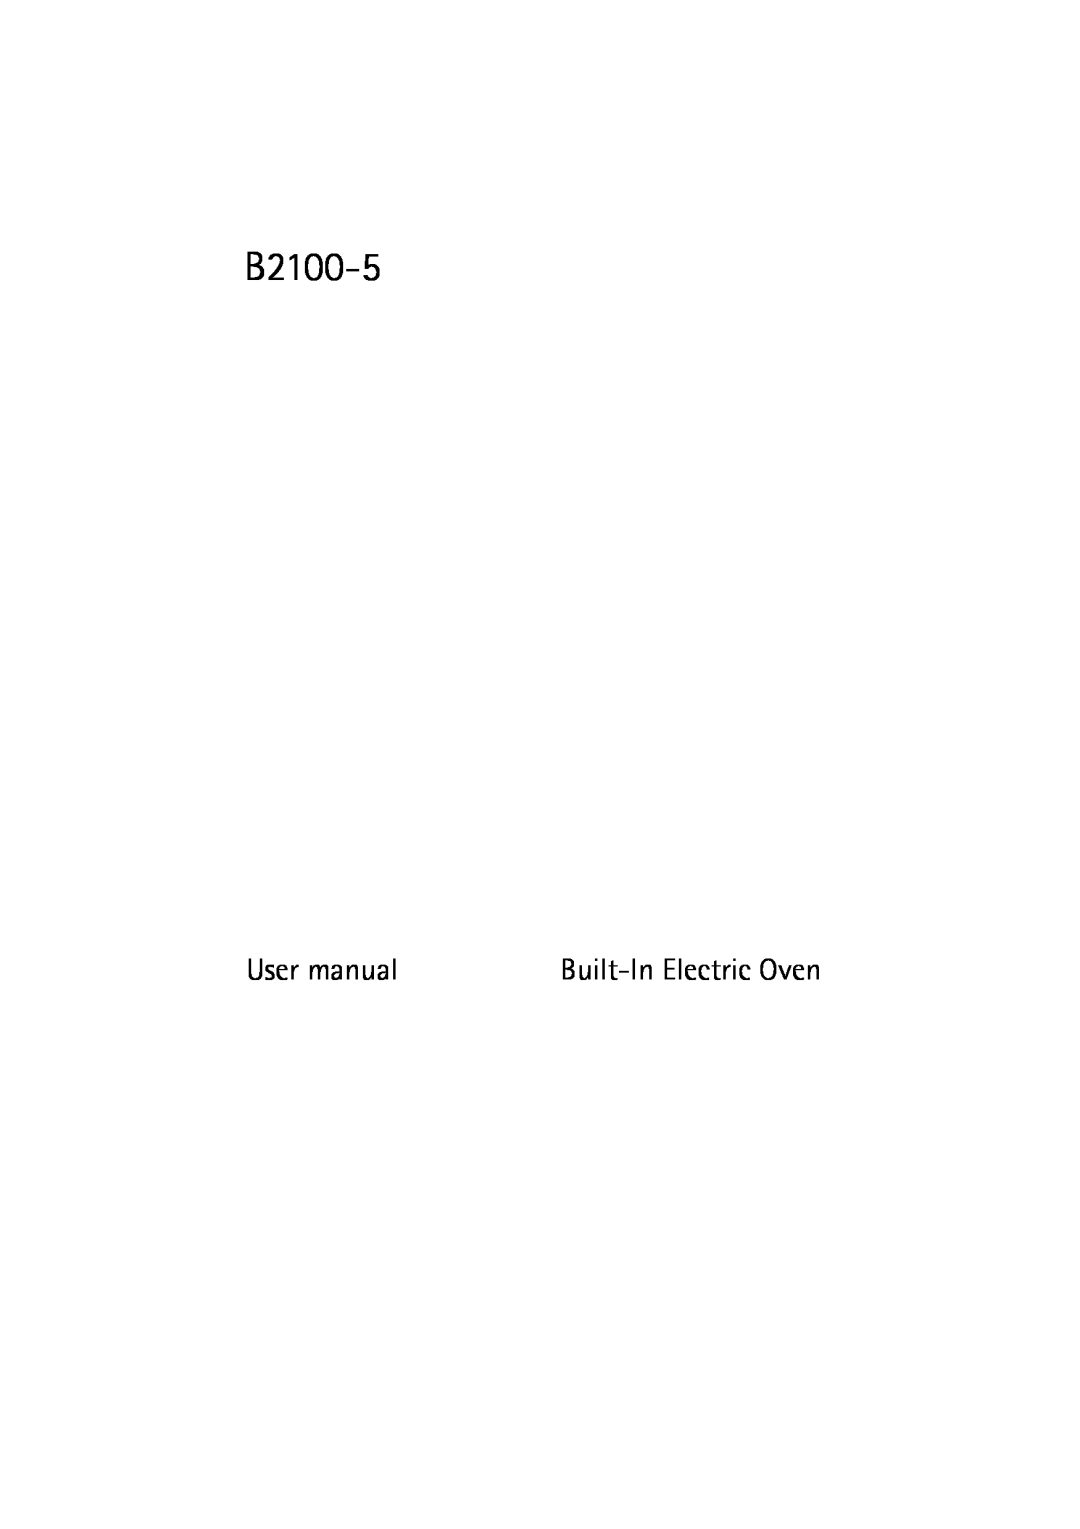 Electrolux B2100-5 user manual User manual 